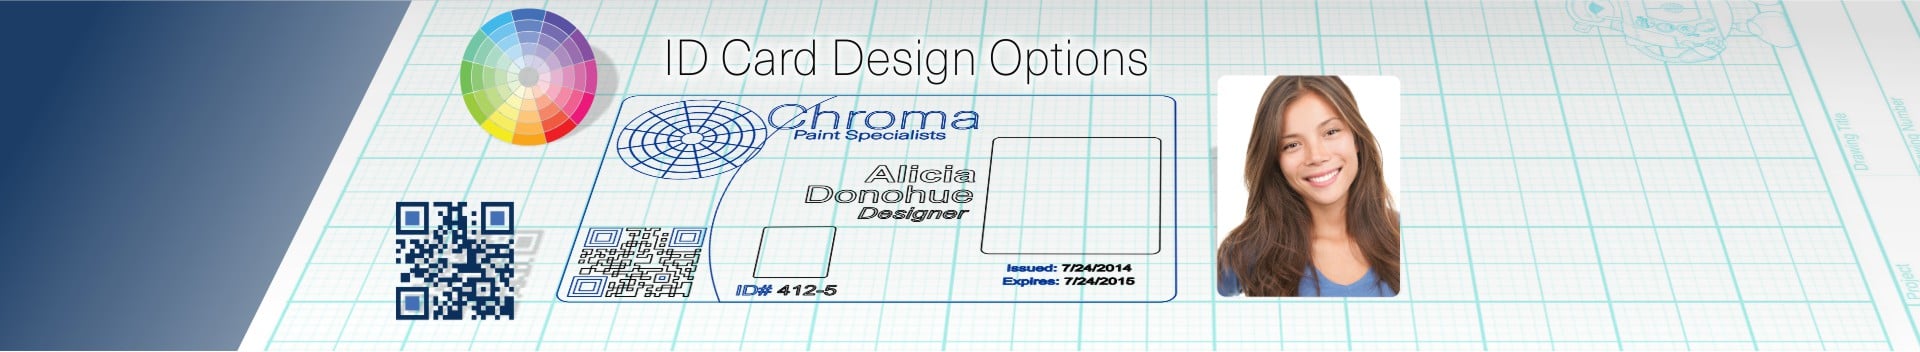 ID Card Design Options